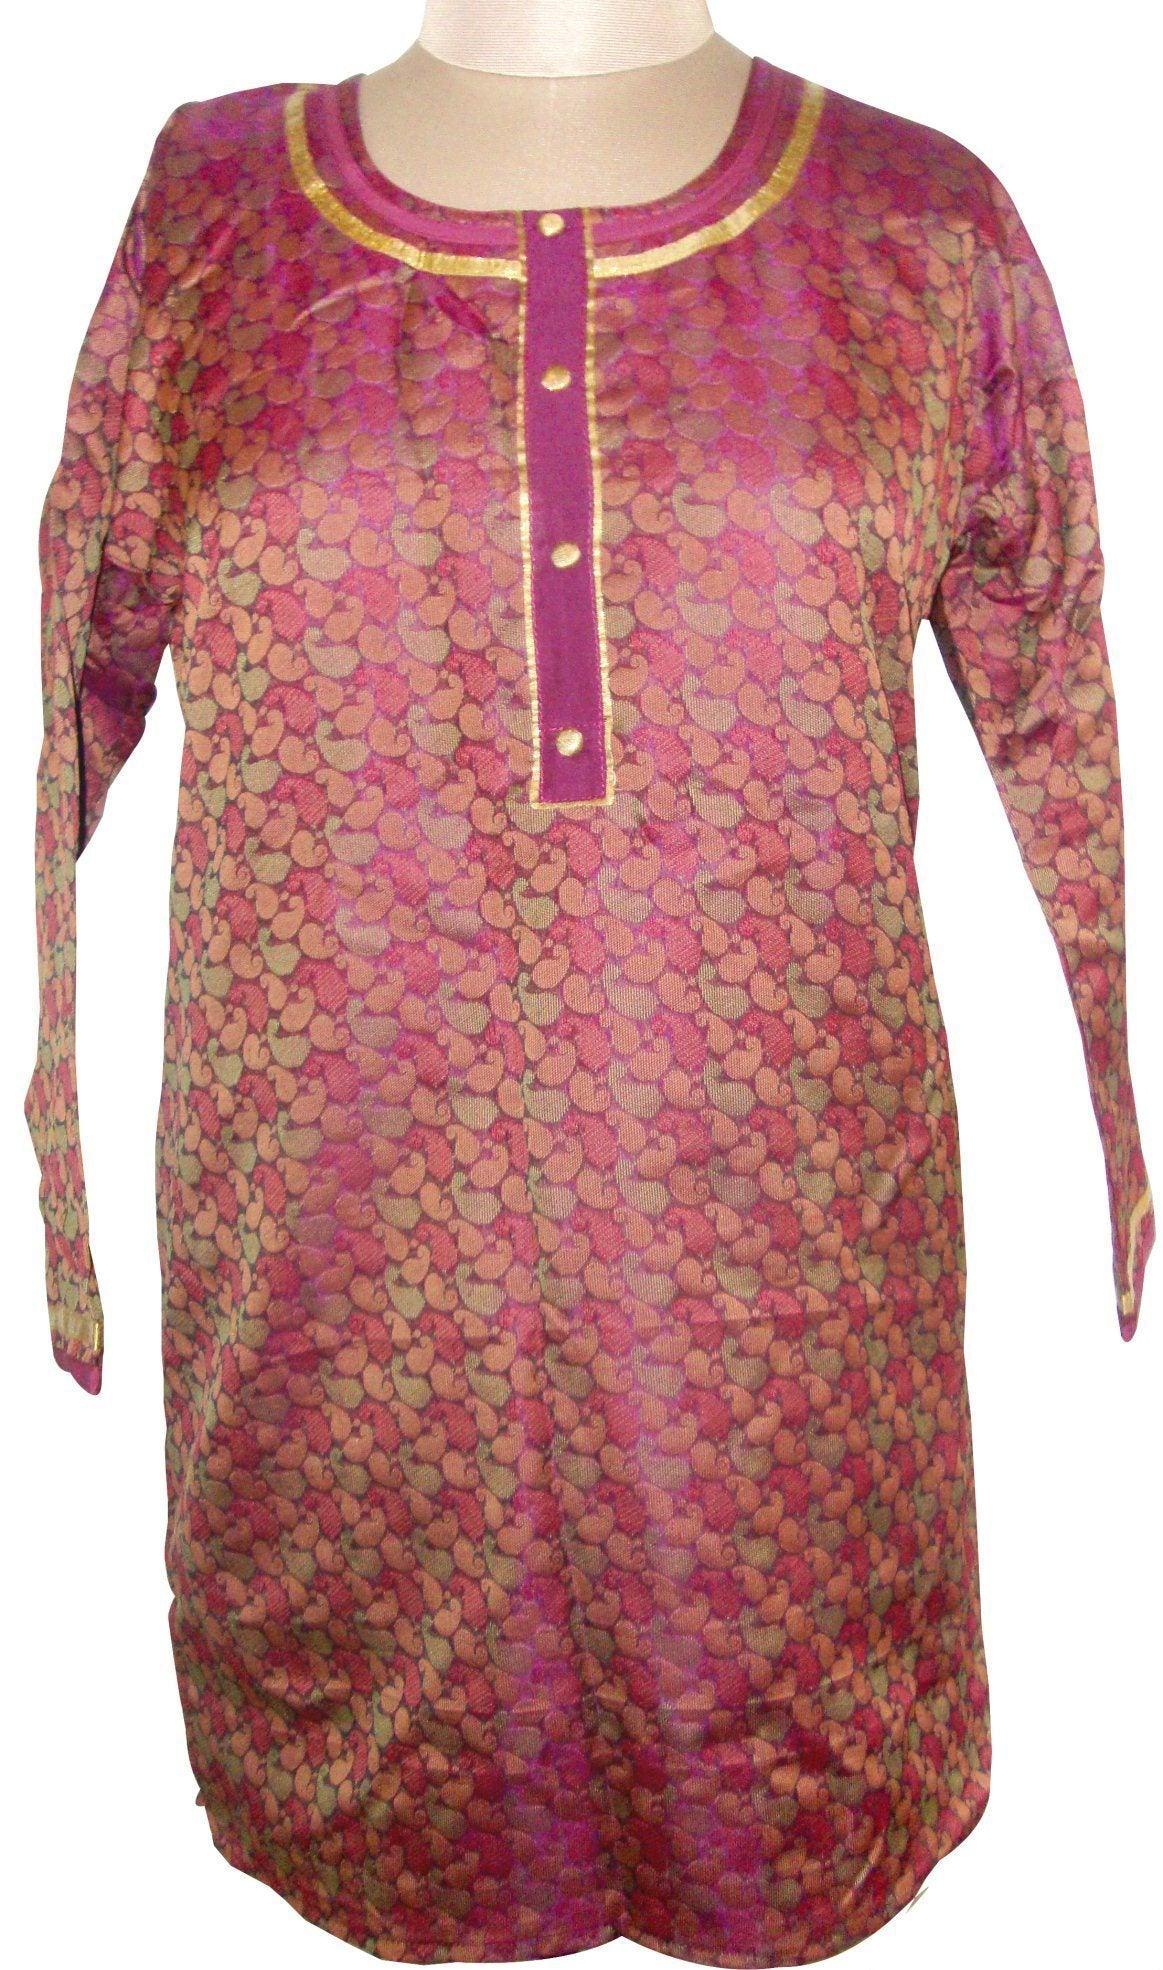 Purple Cotton Jequard  Stitched Kurta dress Size 44 SC504-Anvi Creations-Kurta,Kurti,Top,Tunic